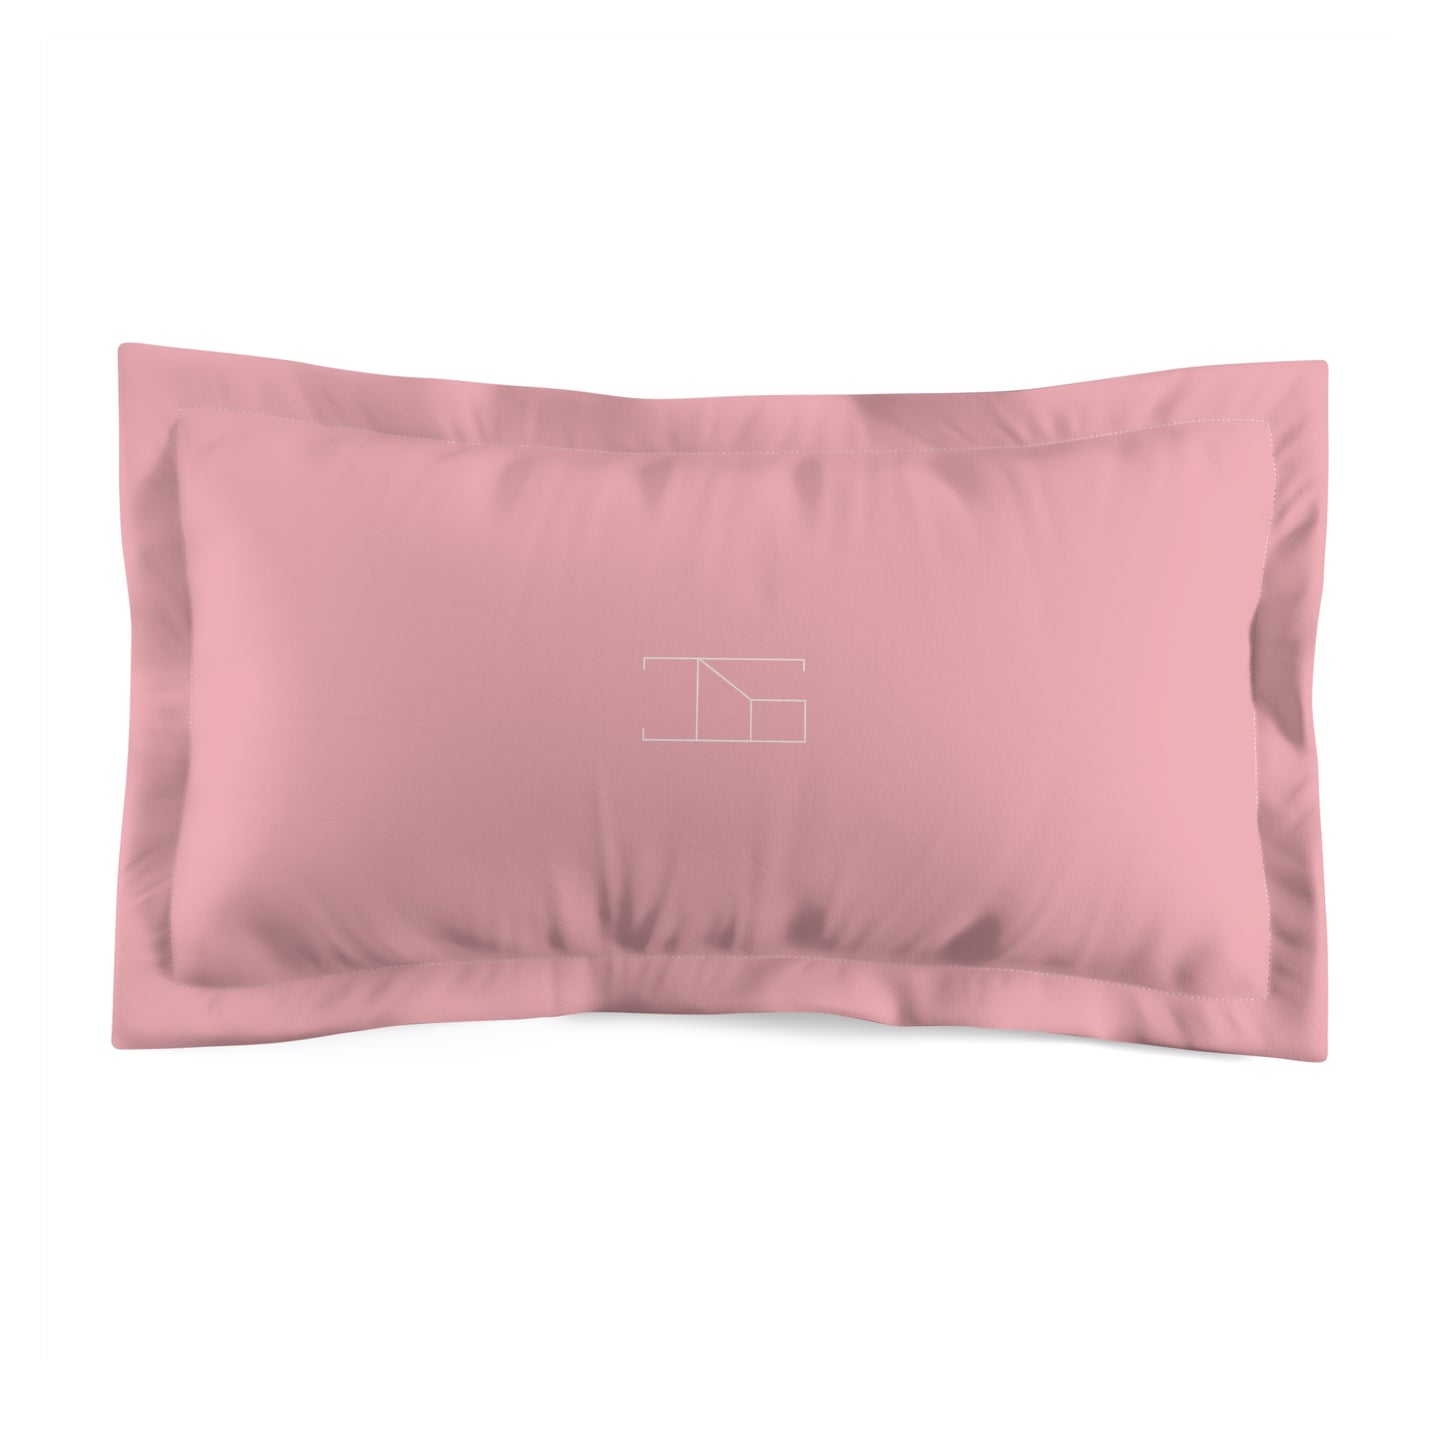 Pillow Sham - Cherry Blossom Pink